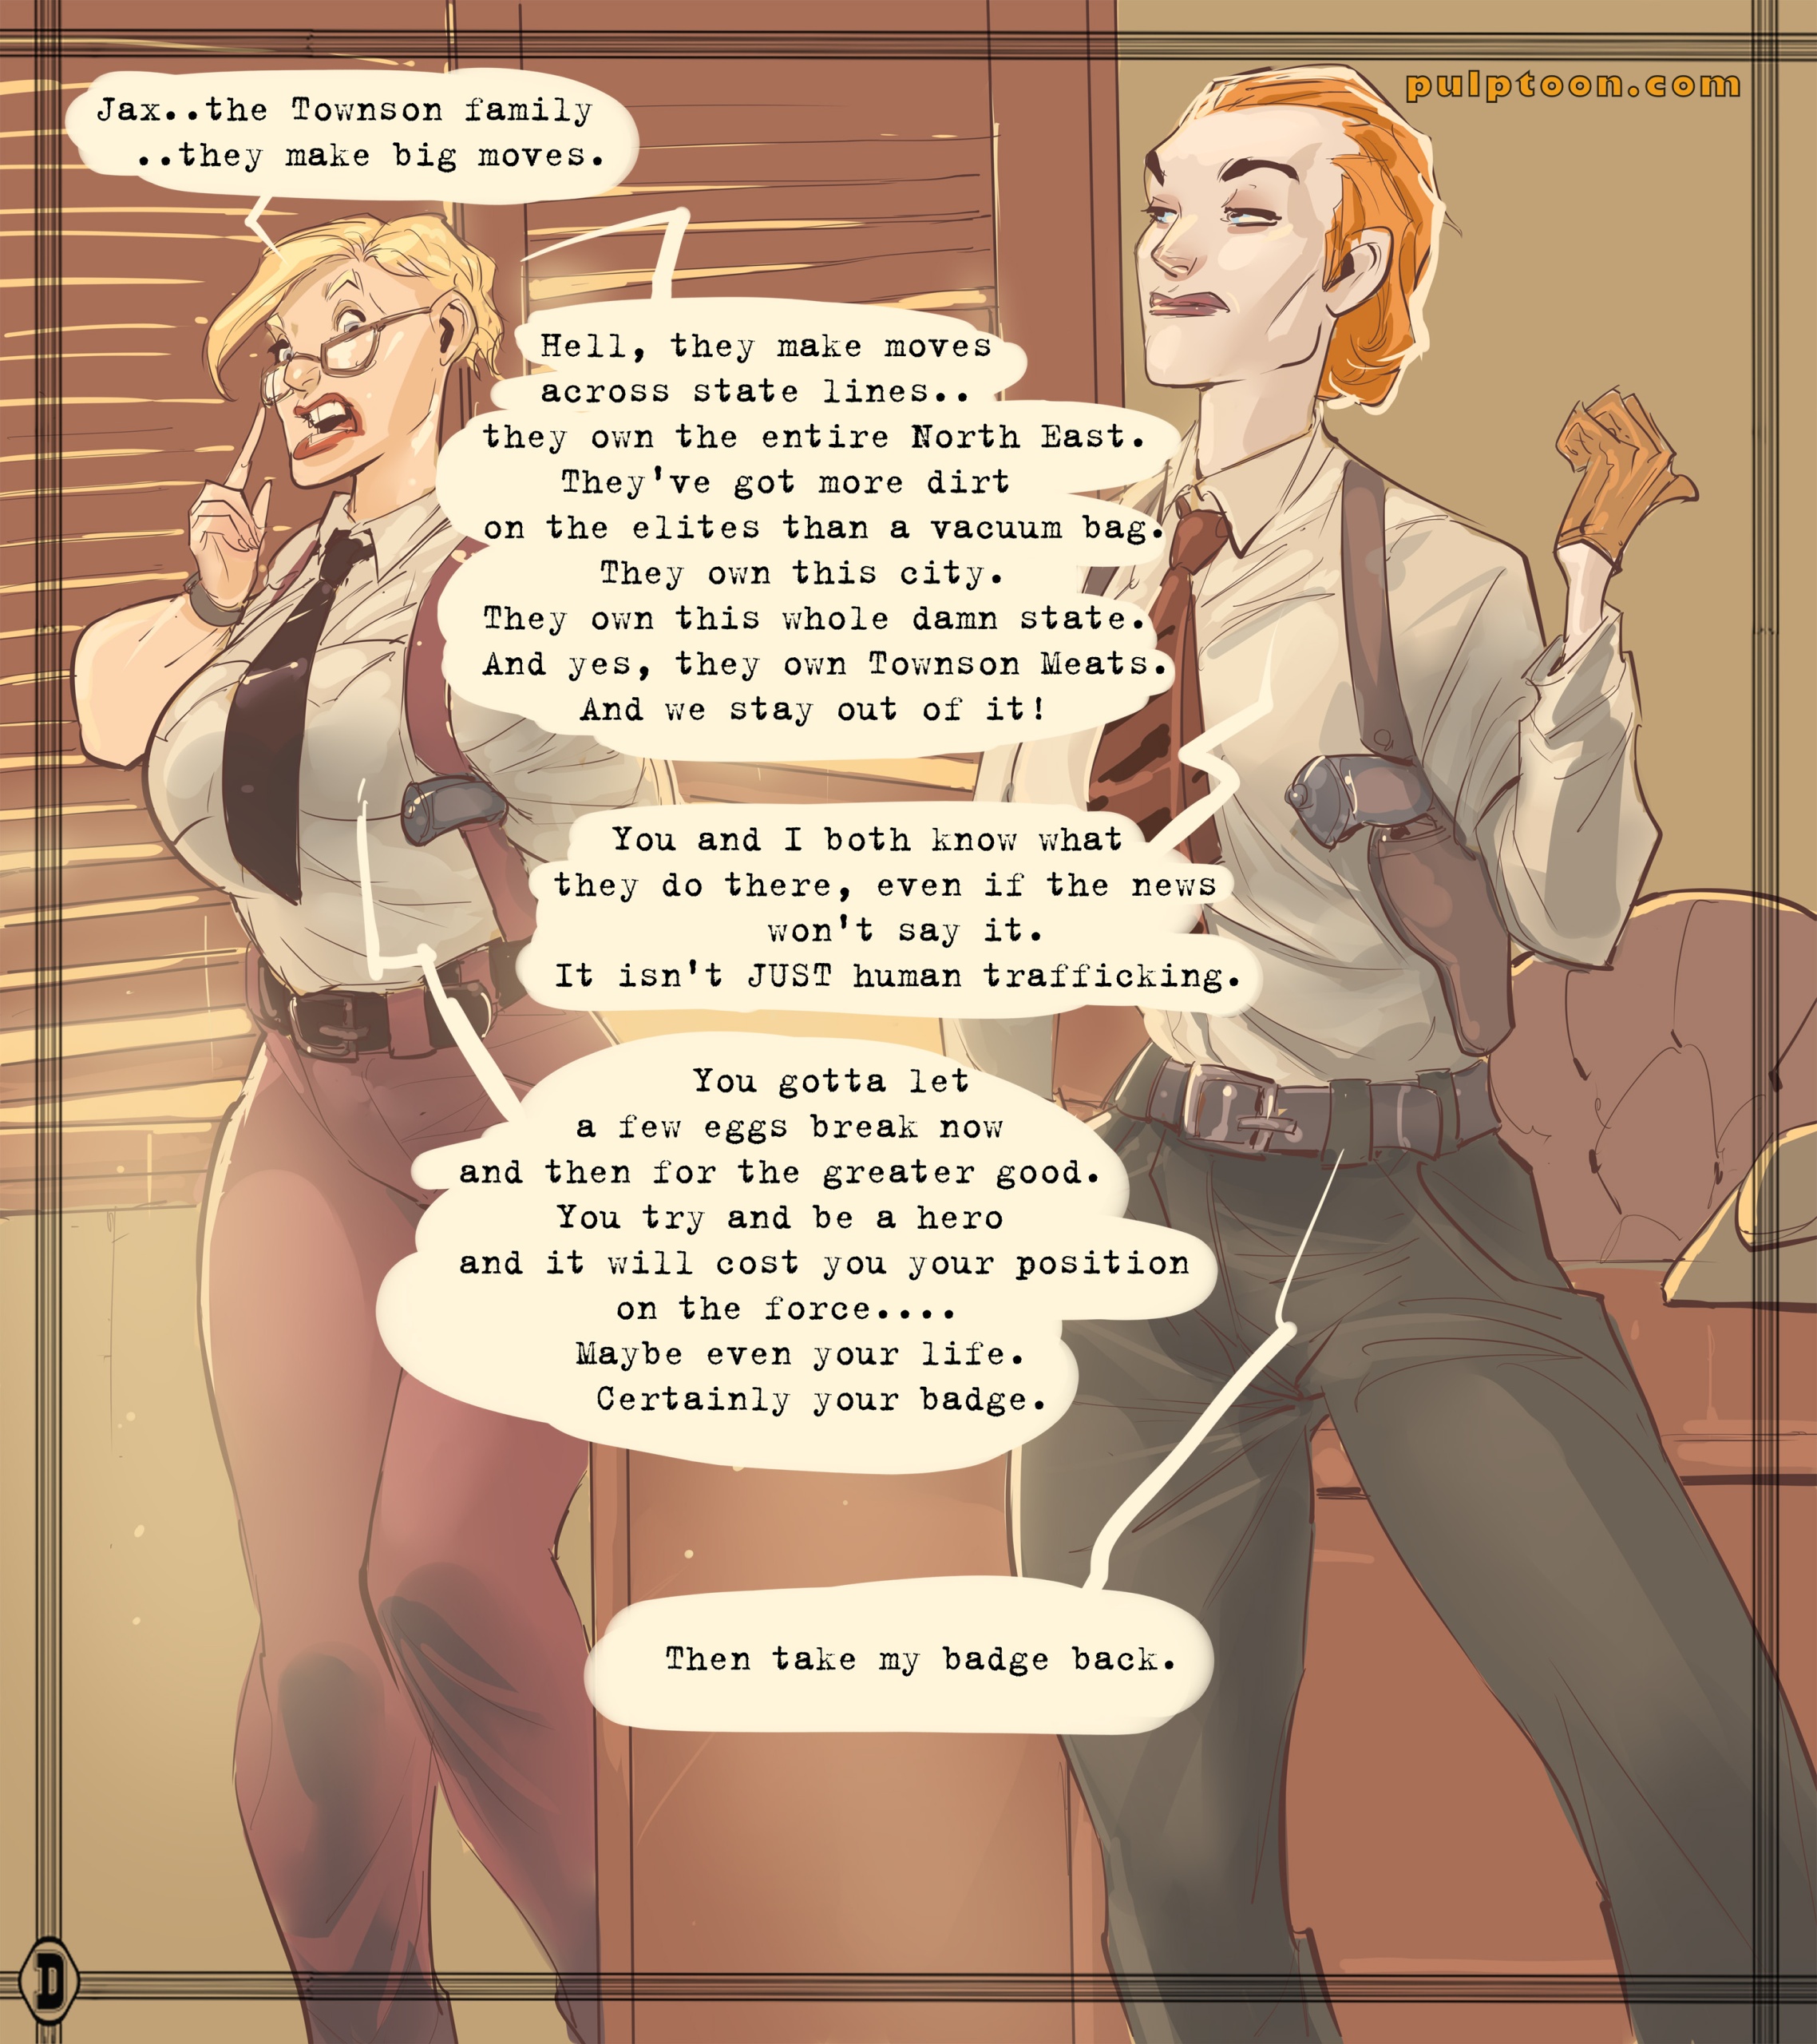 Detective Jax Full Comic | PulpToon